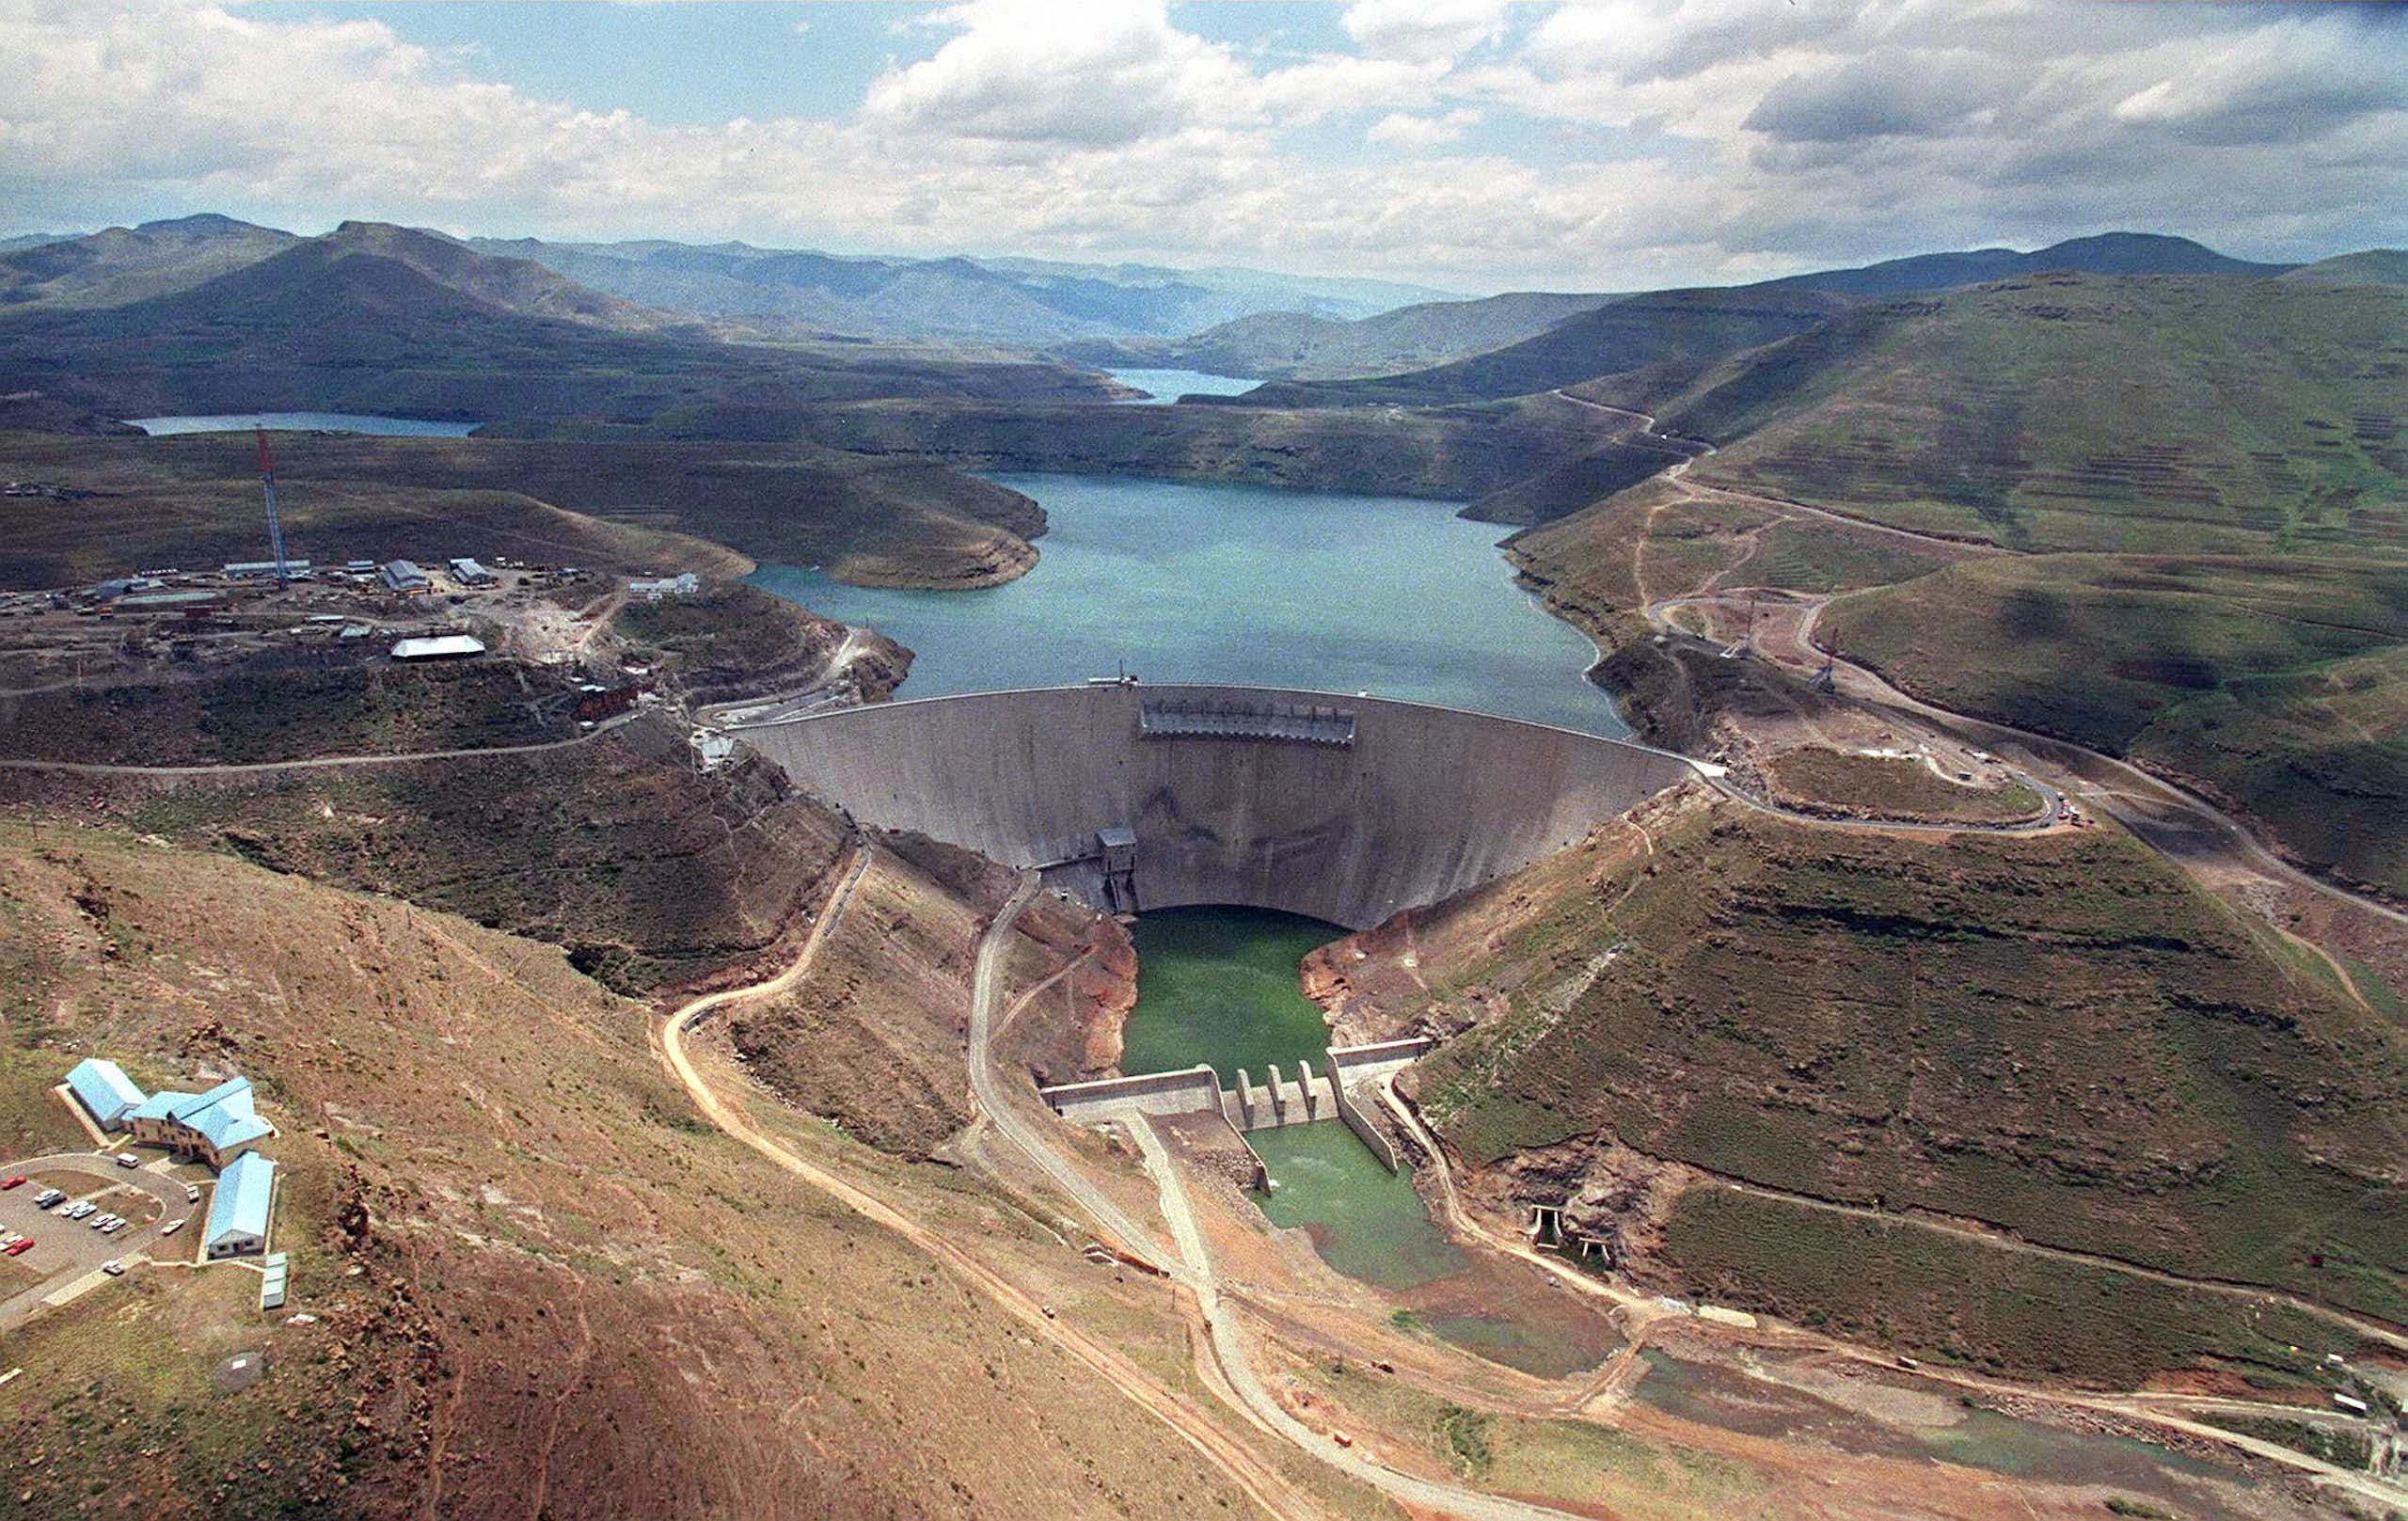 A giant dam set between mountains